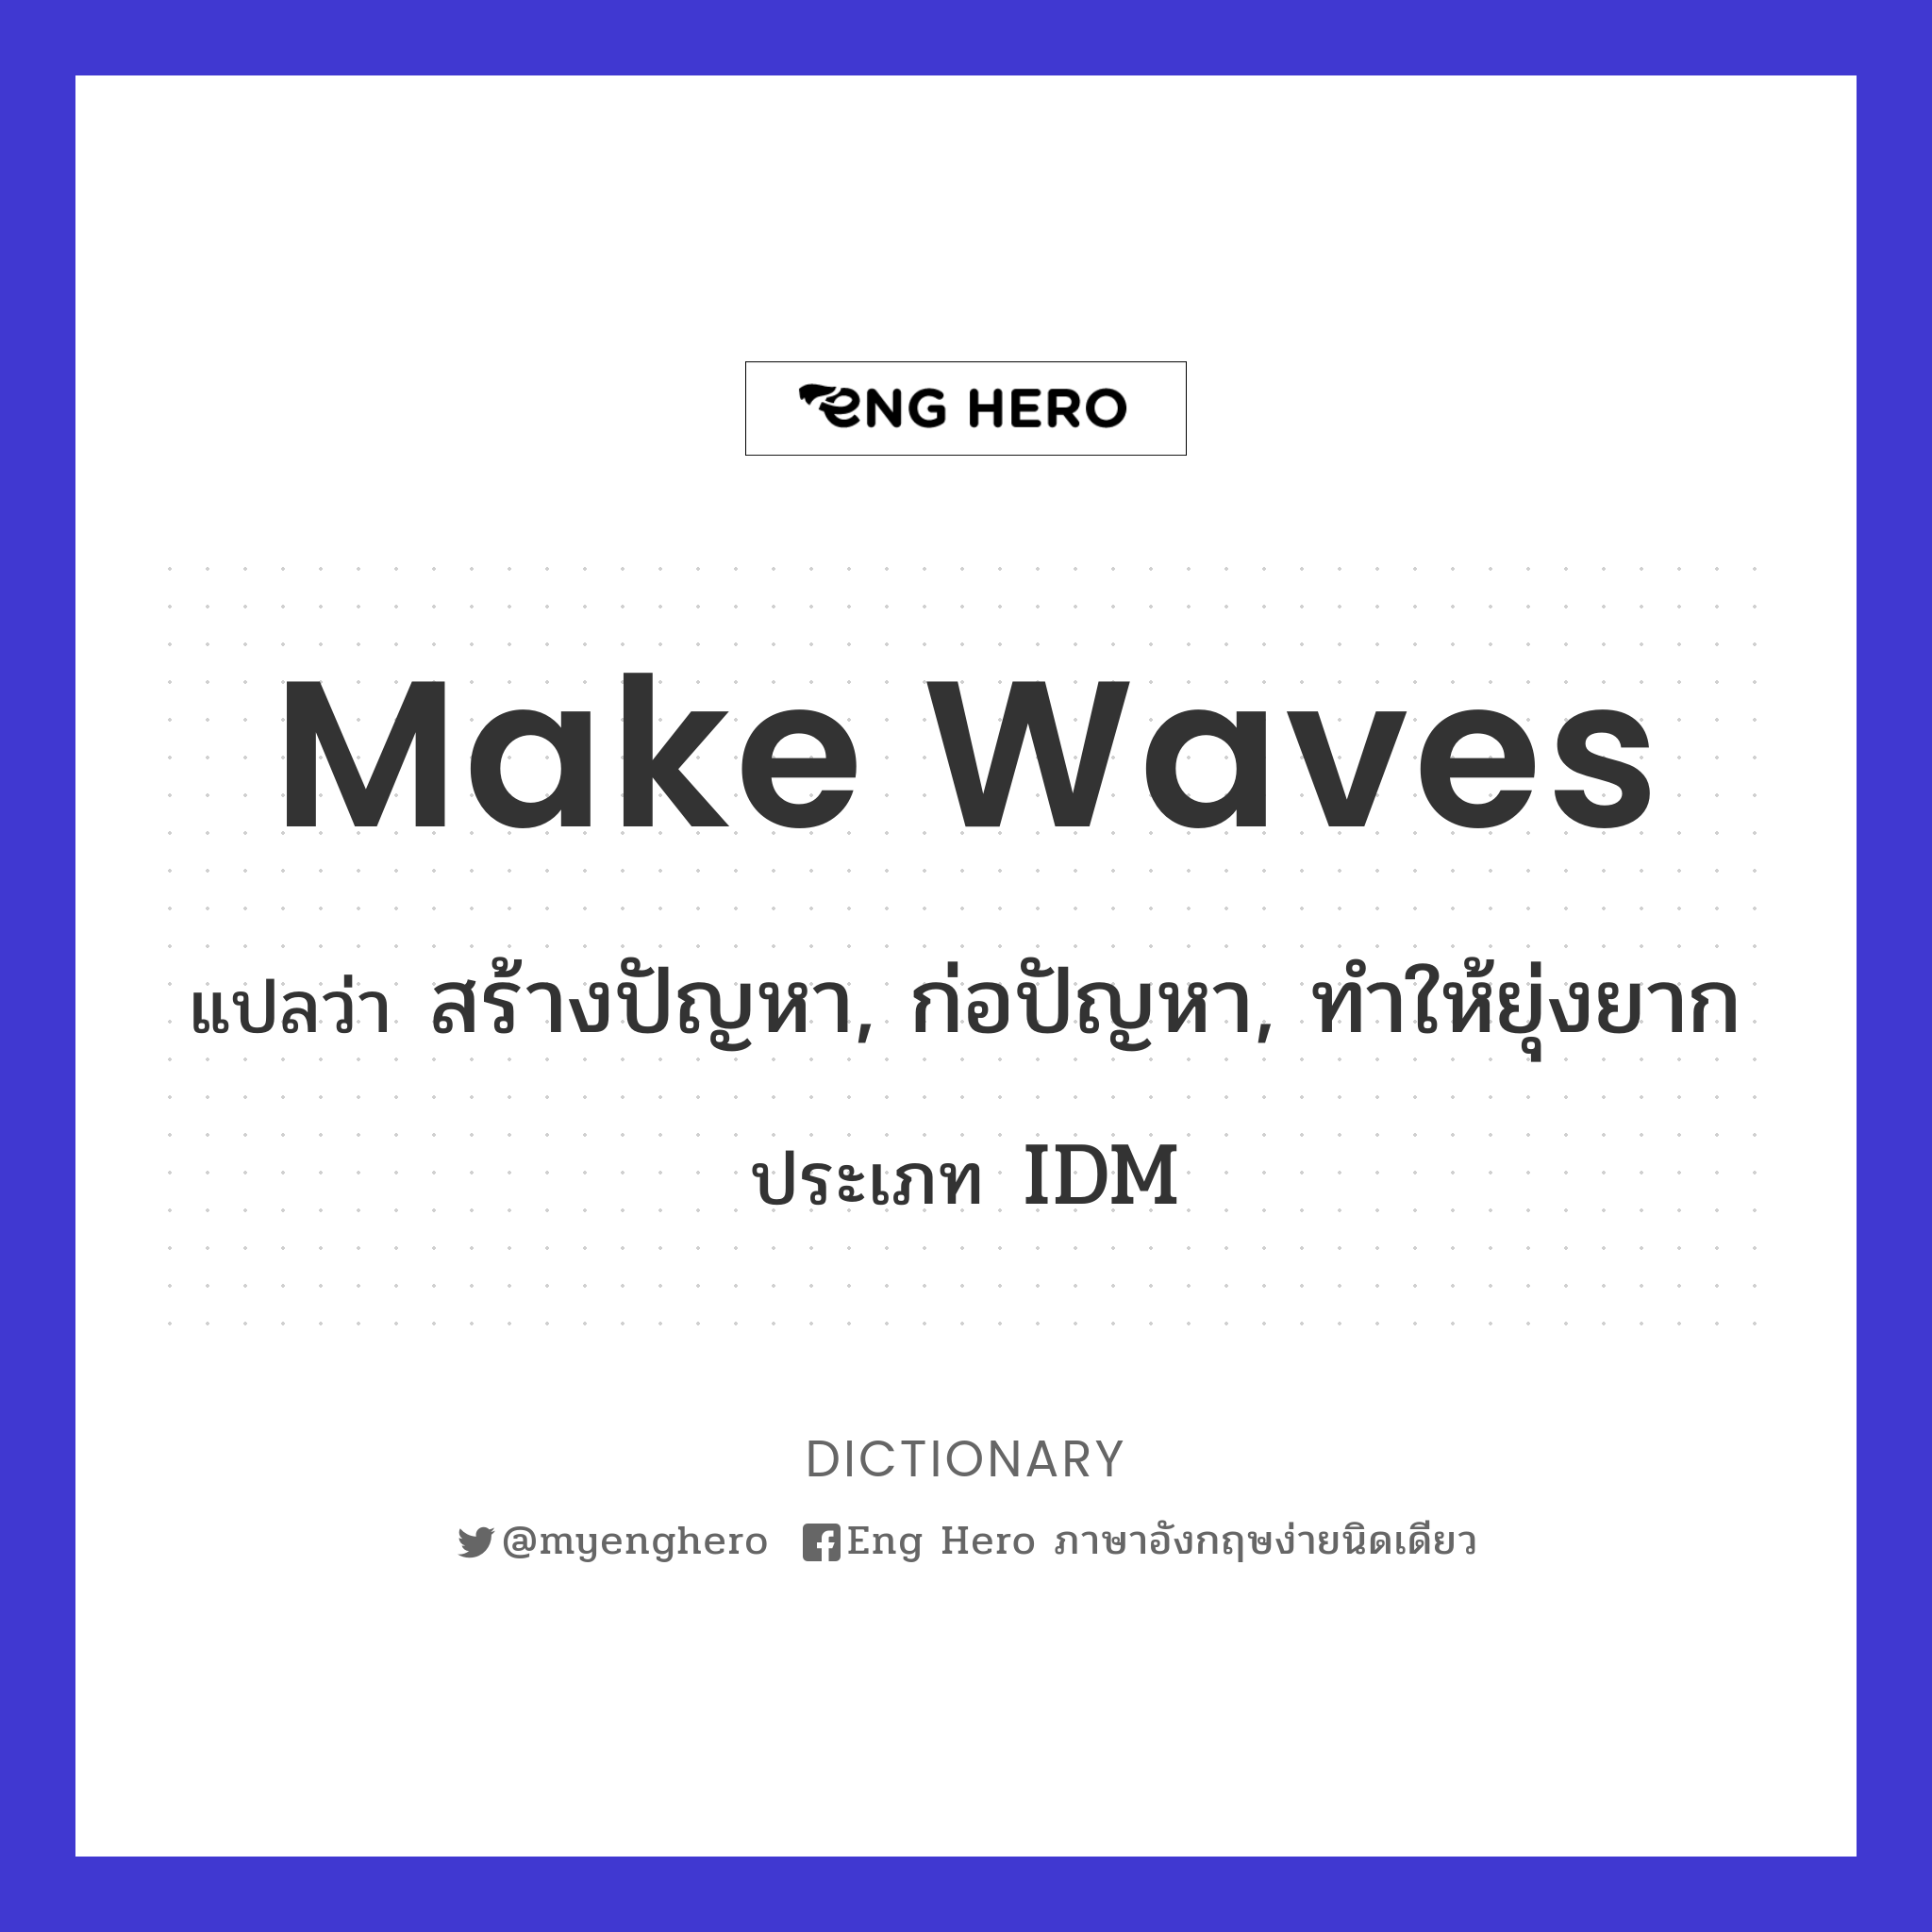 make waves